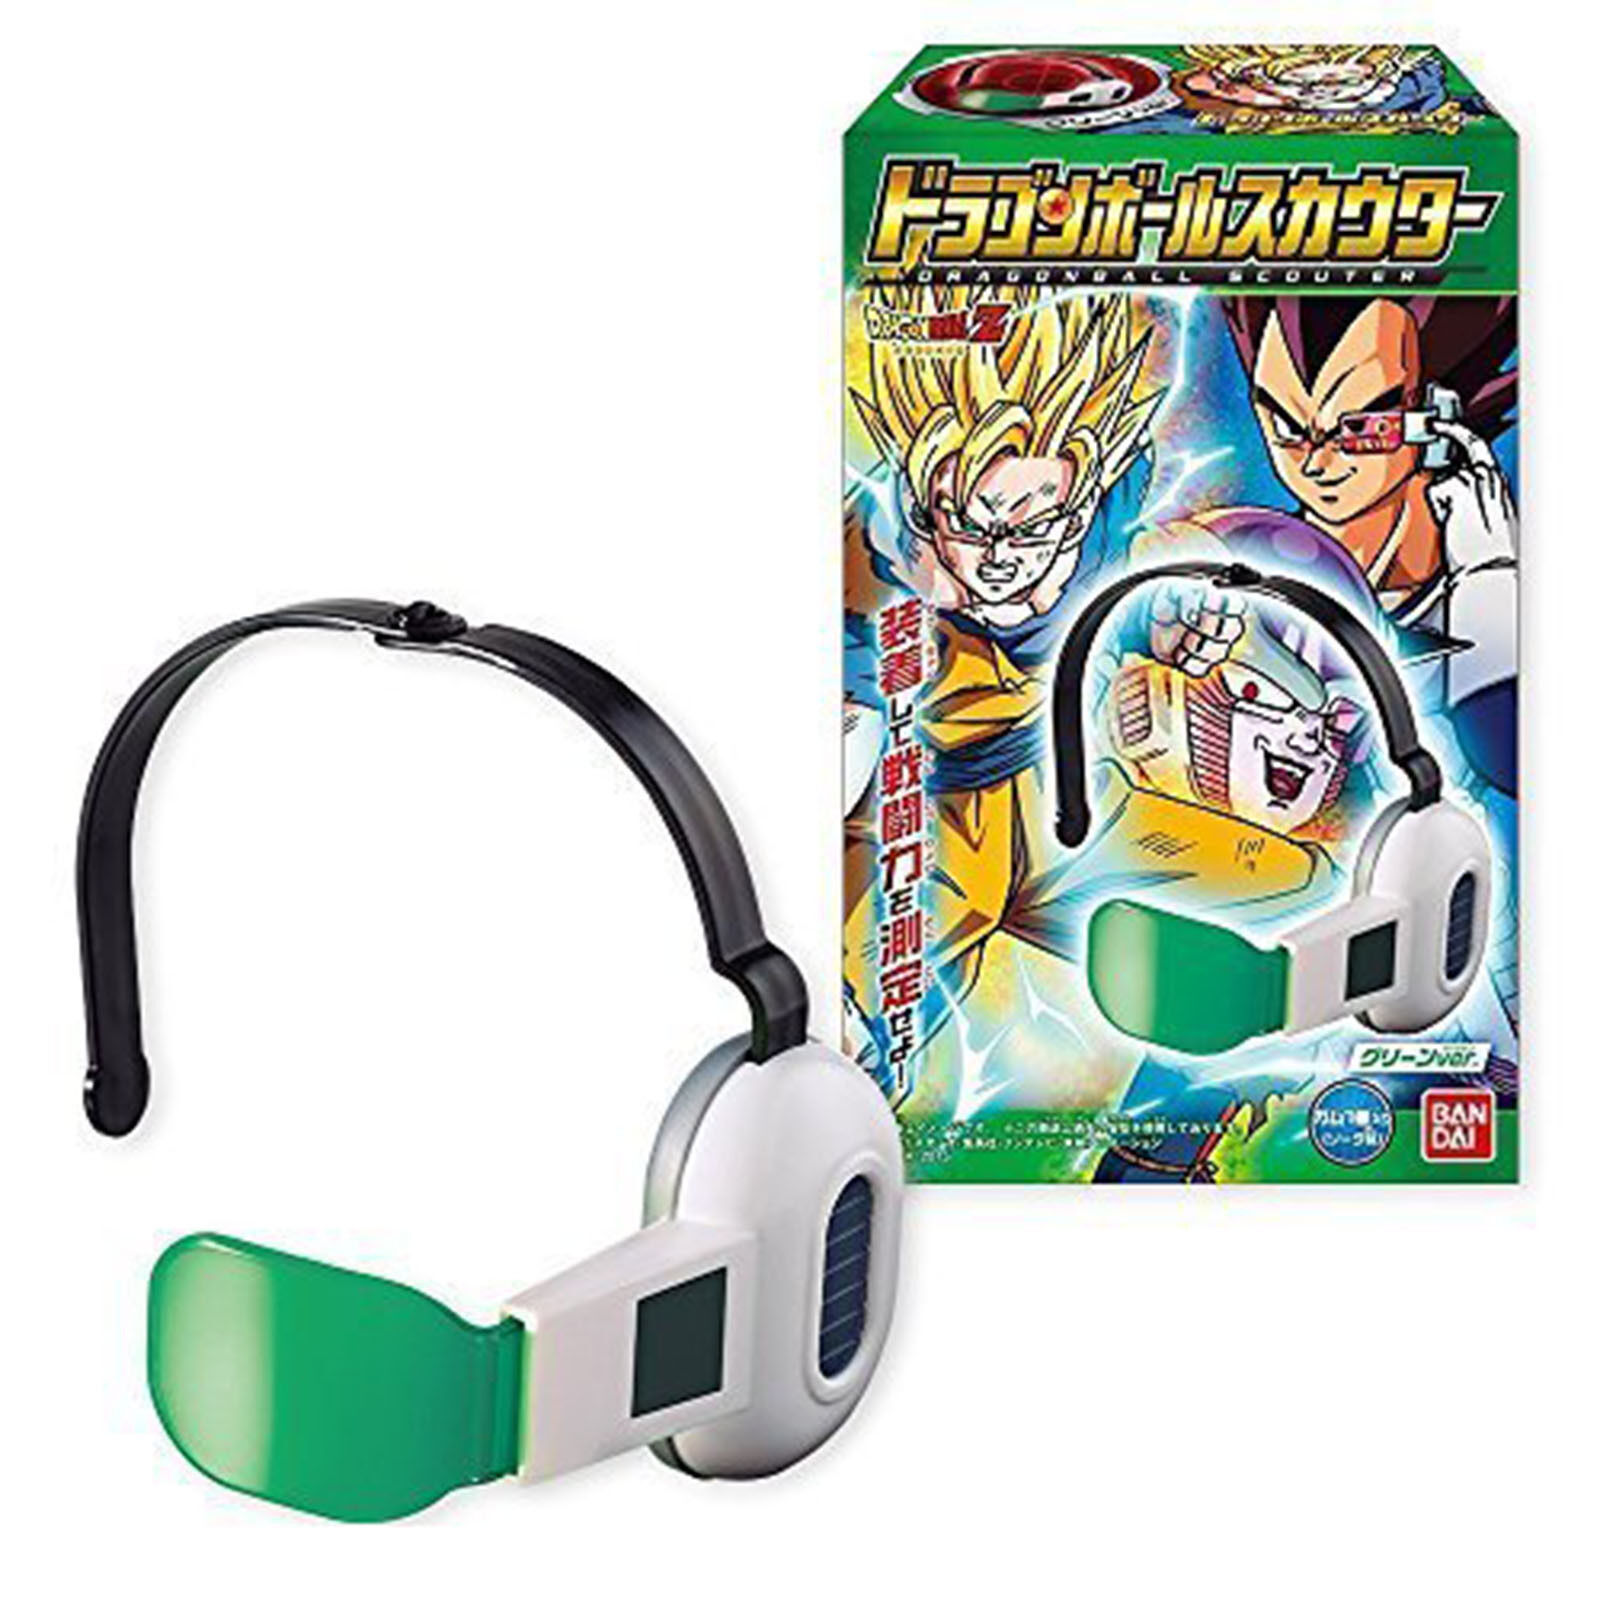 Bandai Dragon Ball Z Saiyan Scouter Green Lens	 NEW Toys DBZ Cosplay Anime